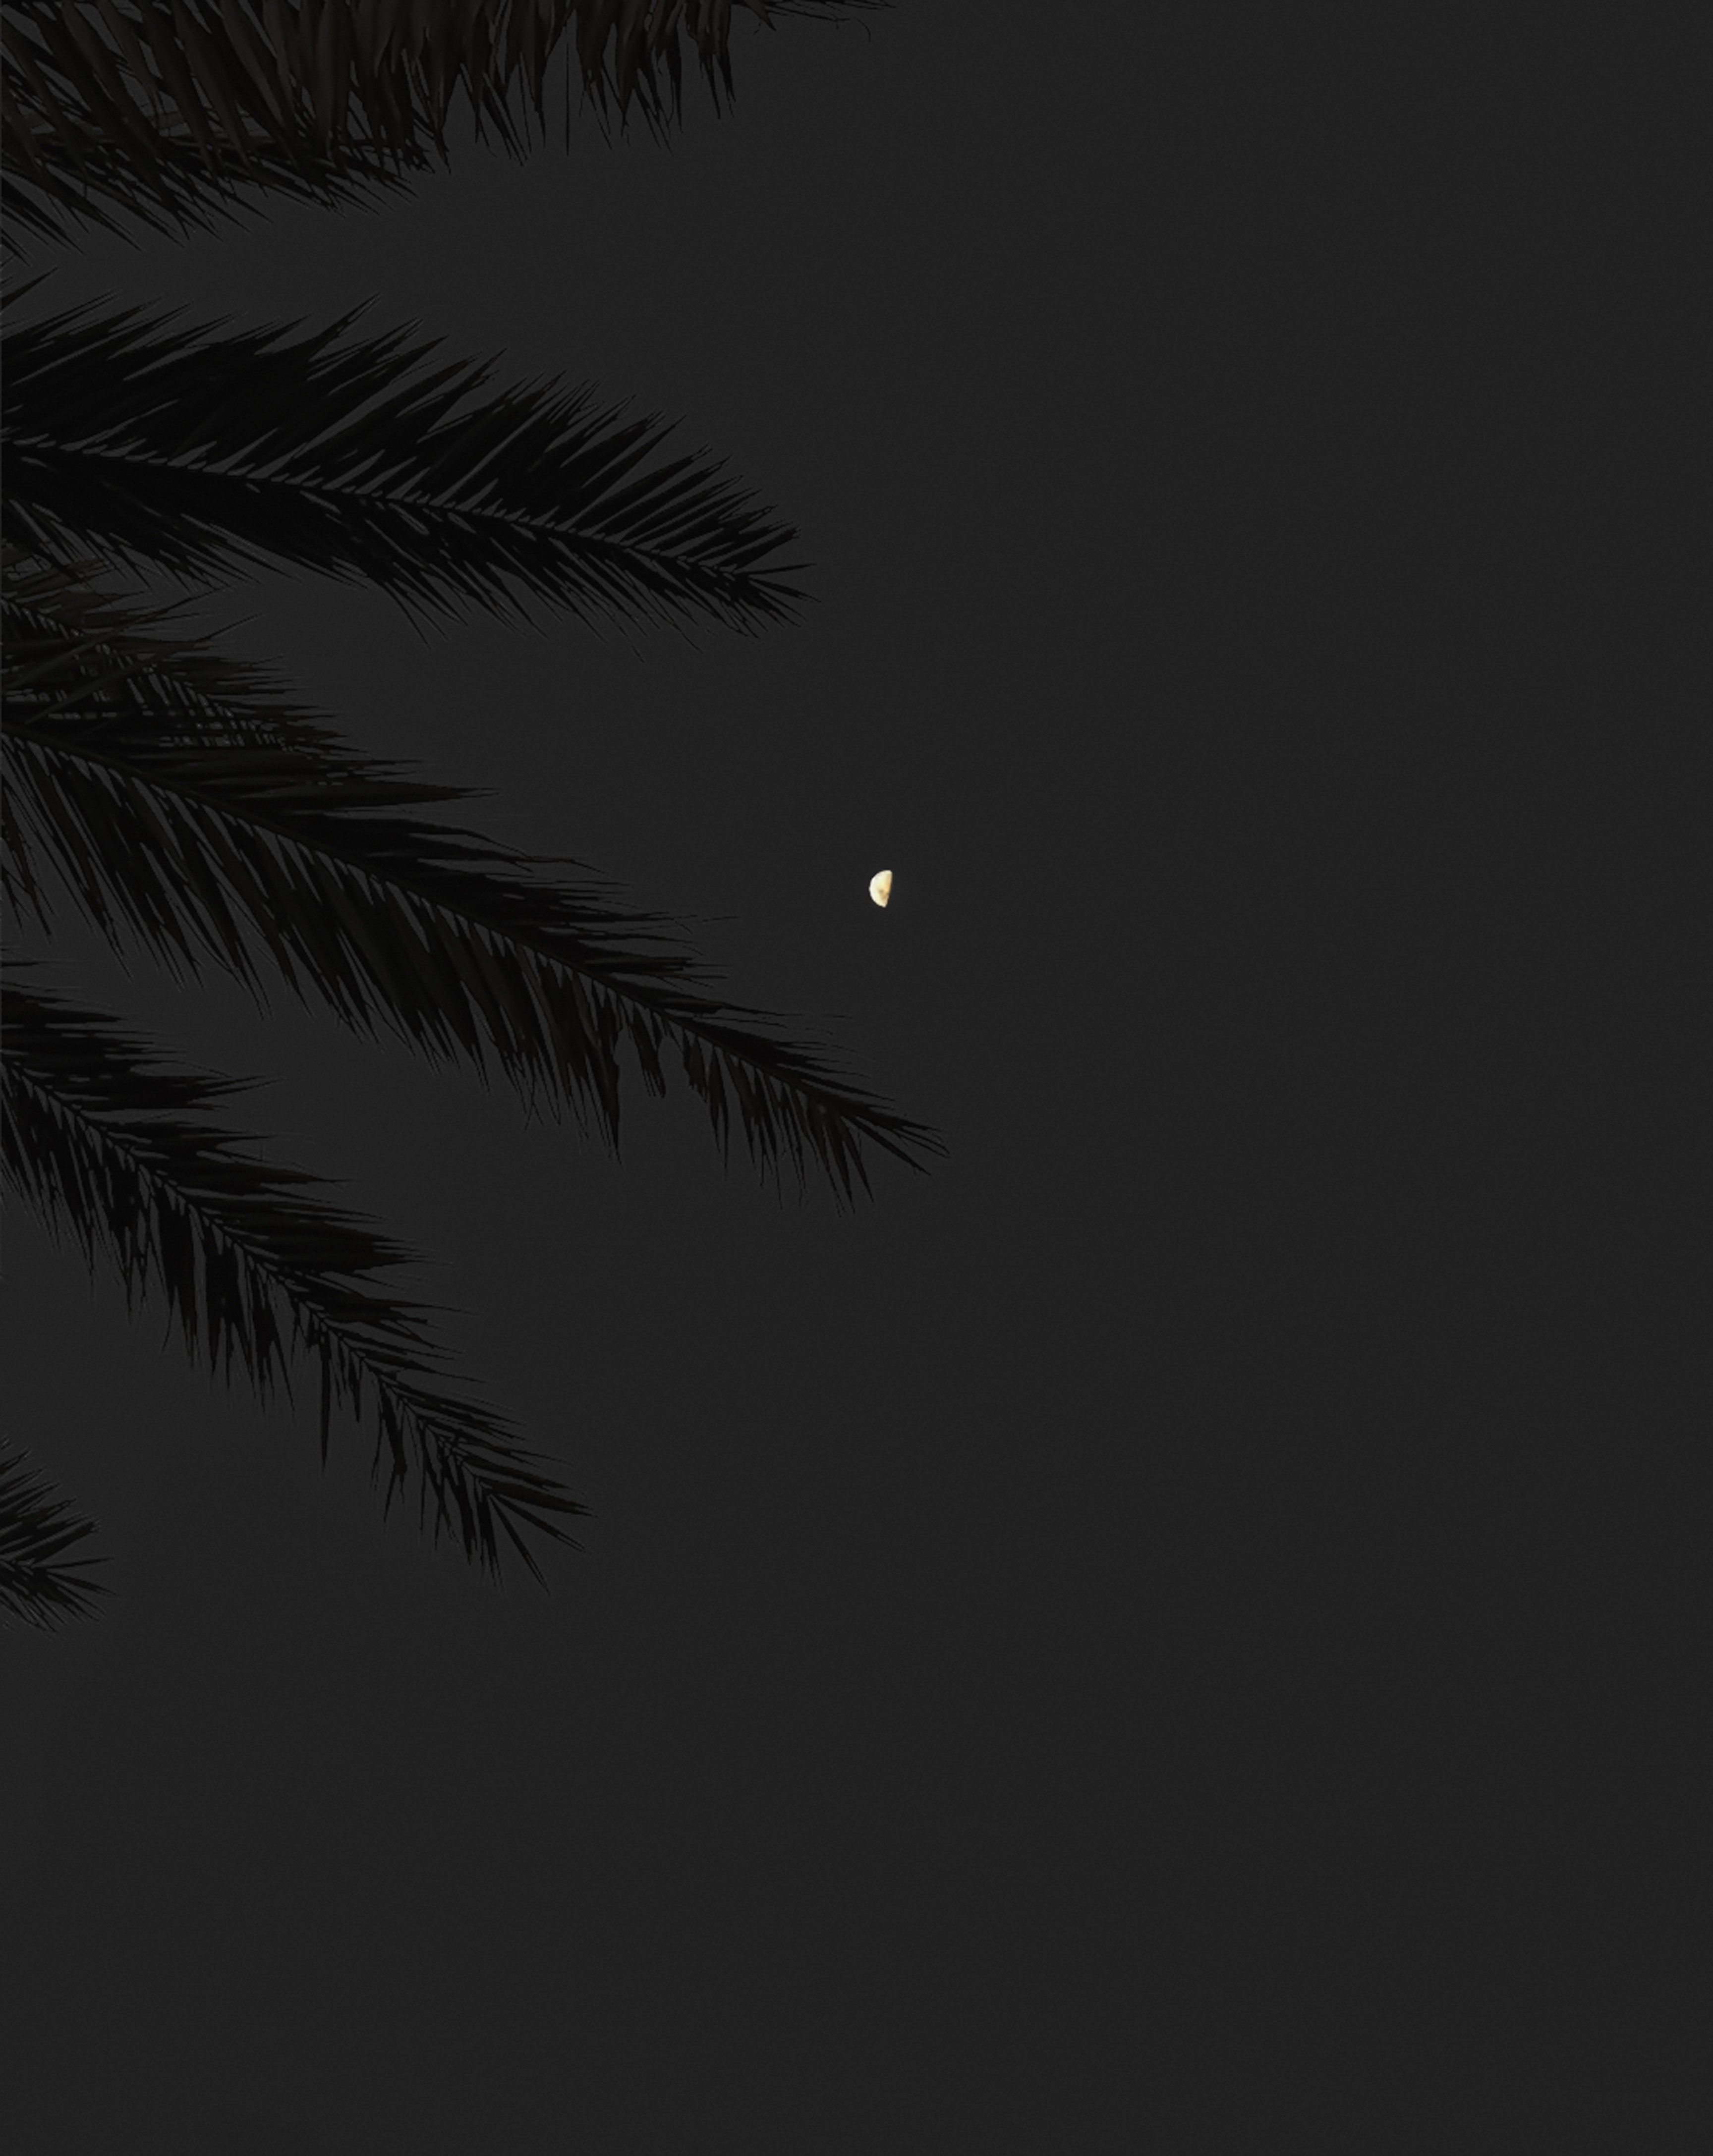 iPhone background night, sky, black, full moon